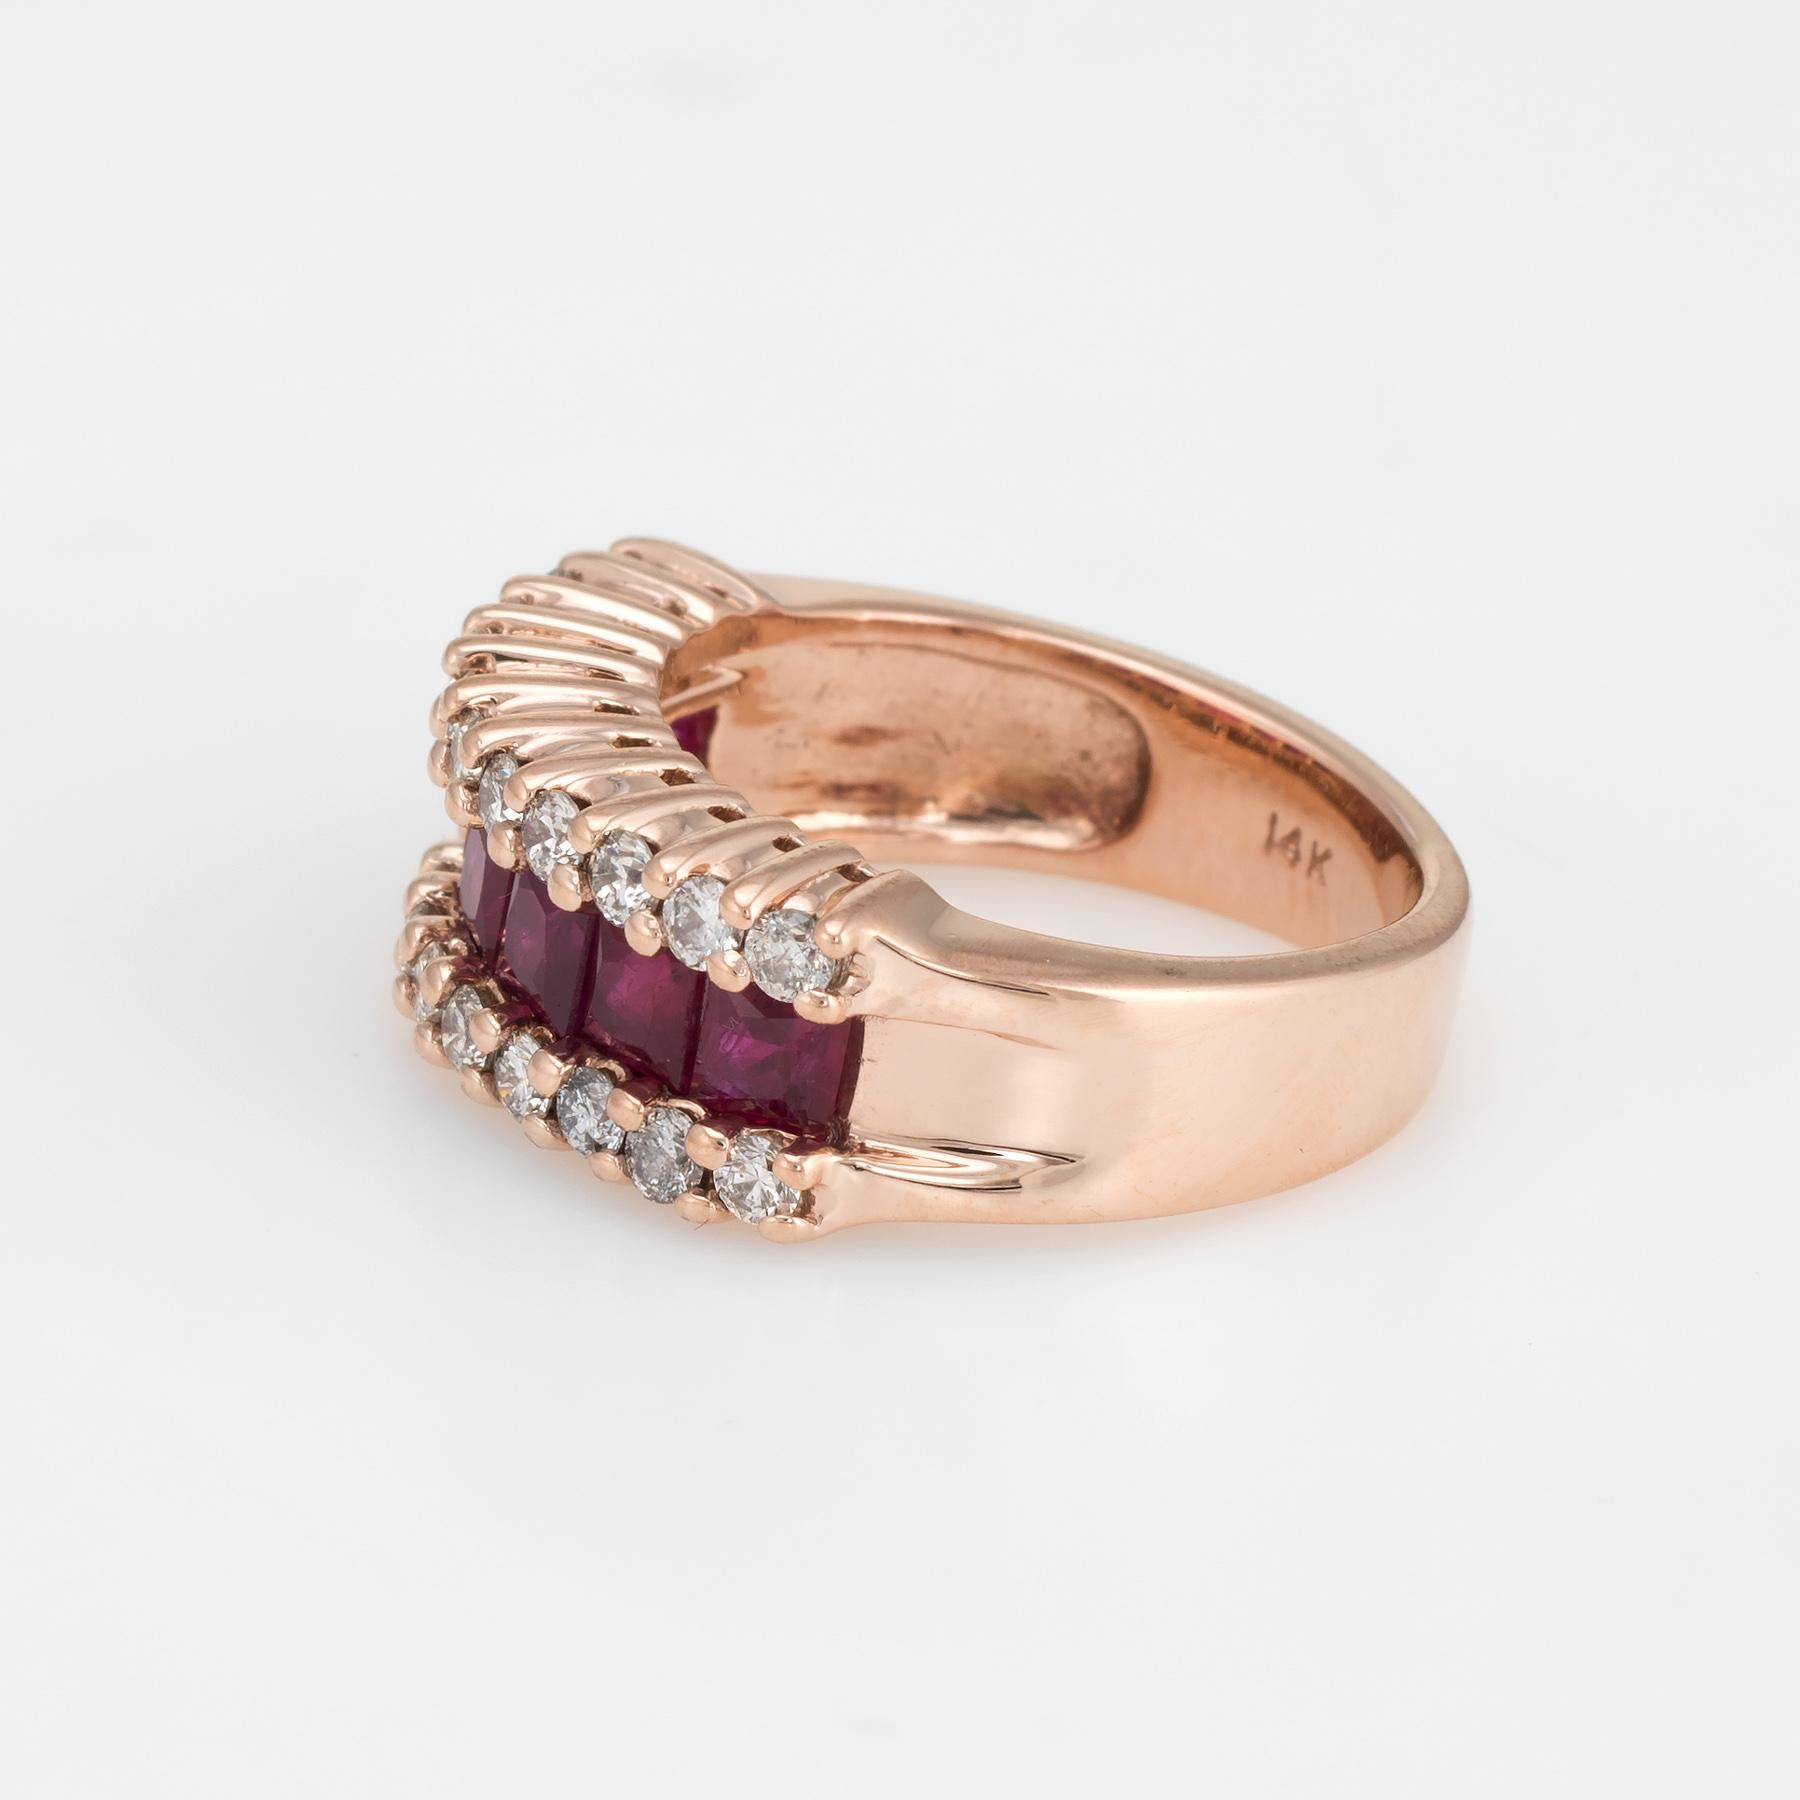 Cushion Cut Vintage Ruby Diamond Band 14 Karat Rose Gold Ring Alternative Wedding Jewelry